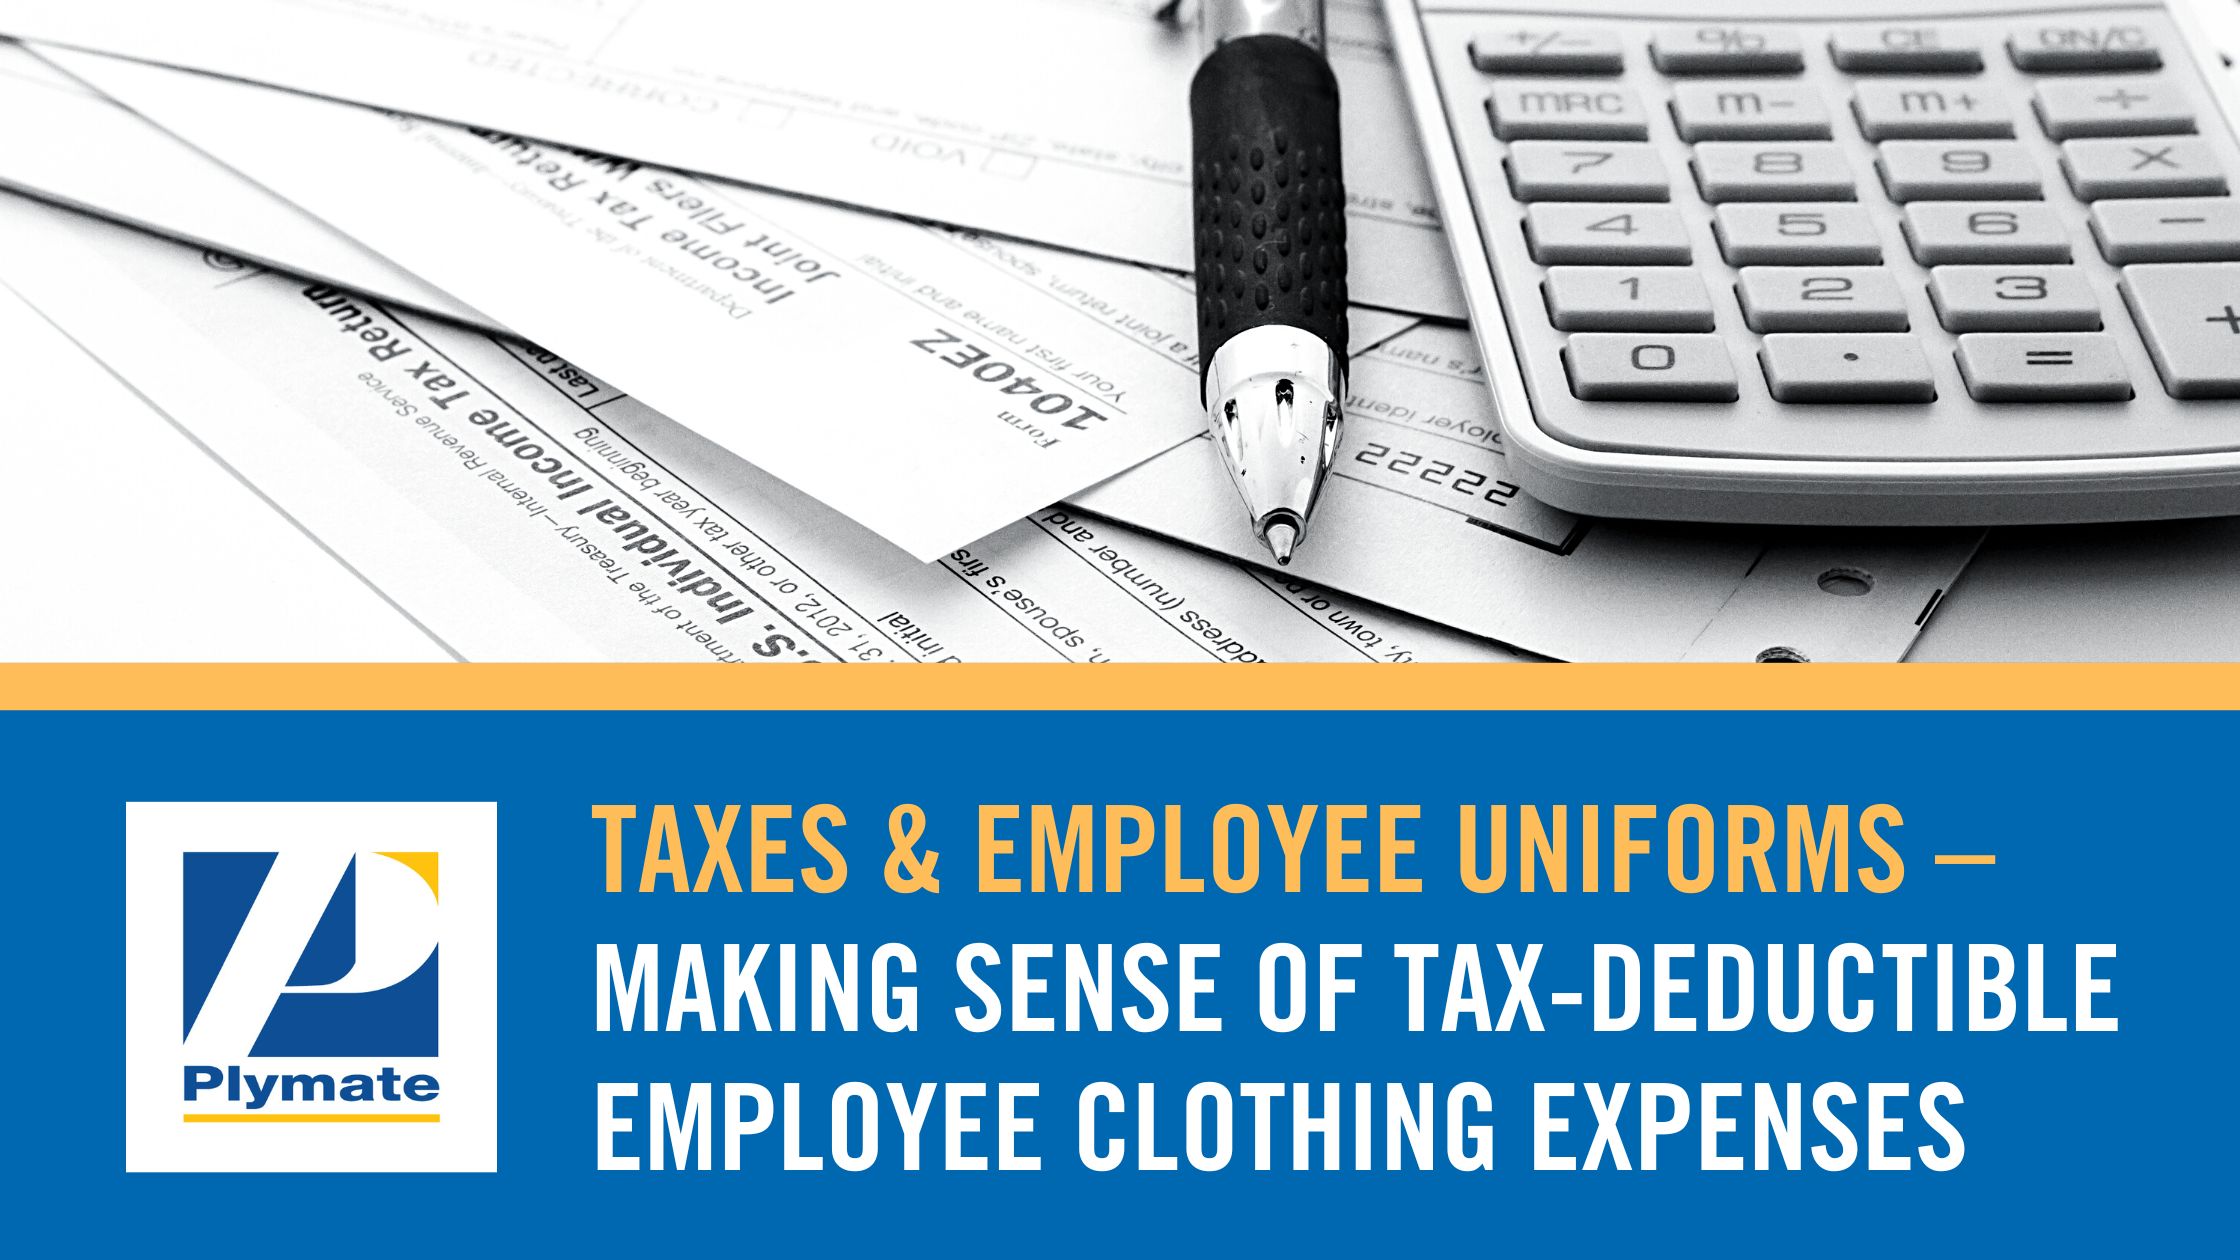 Uniform tax deduction